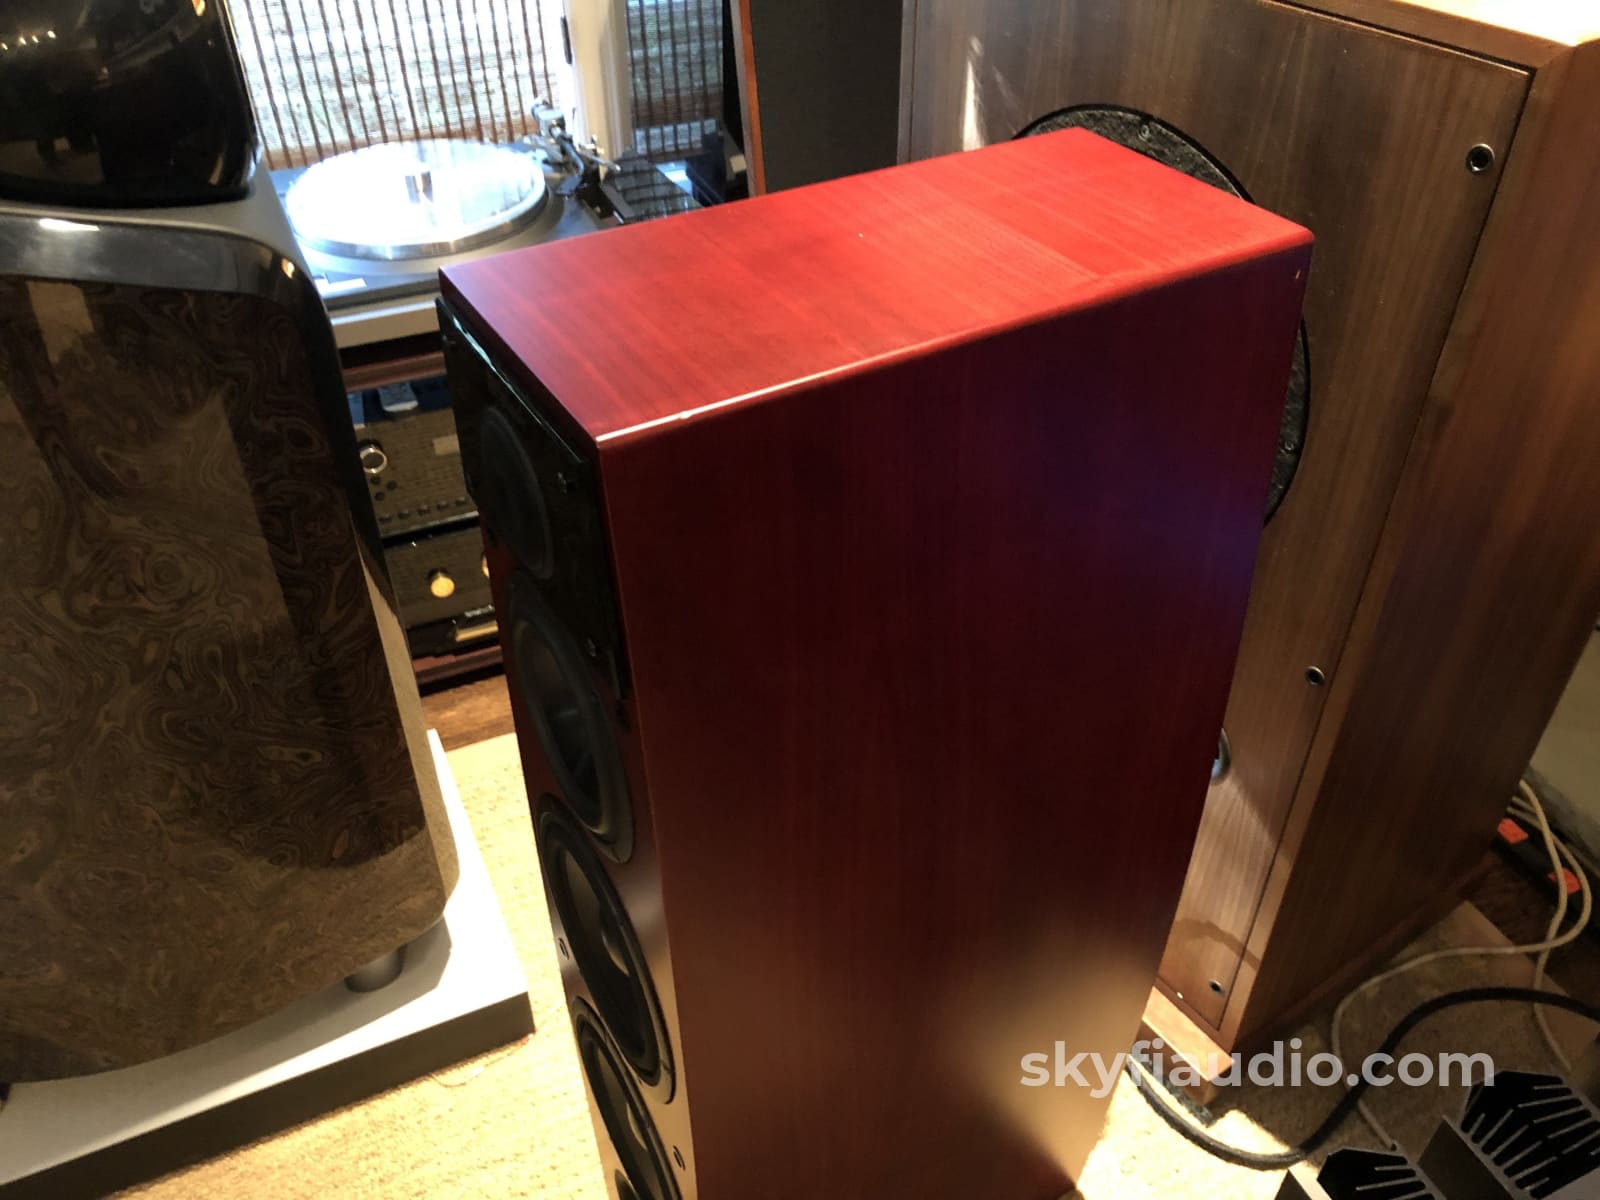 Mcintosh Ls340 Full Range Speakers - In A Deep Red Mahogany Finish